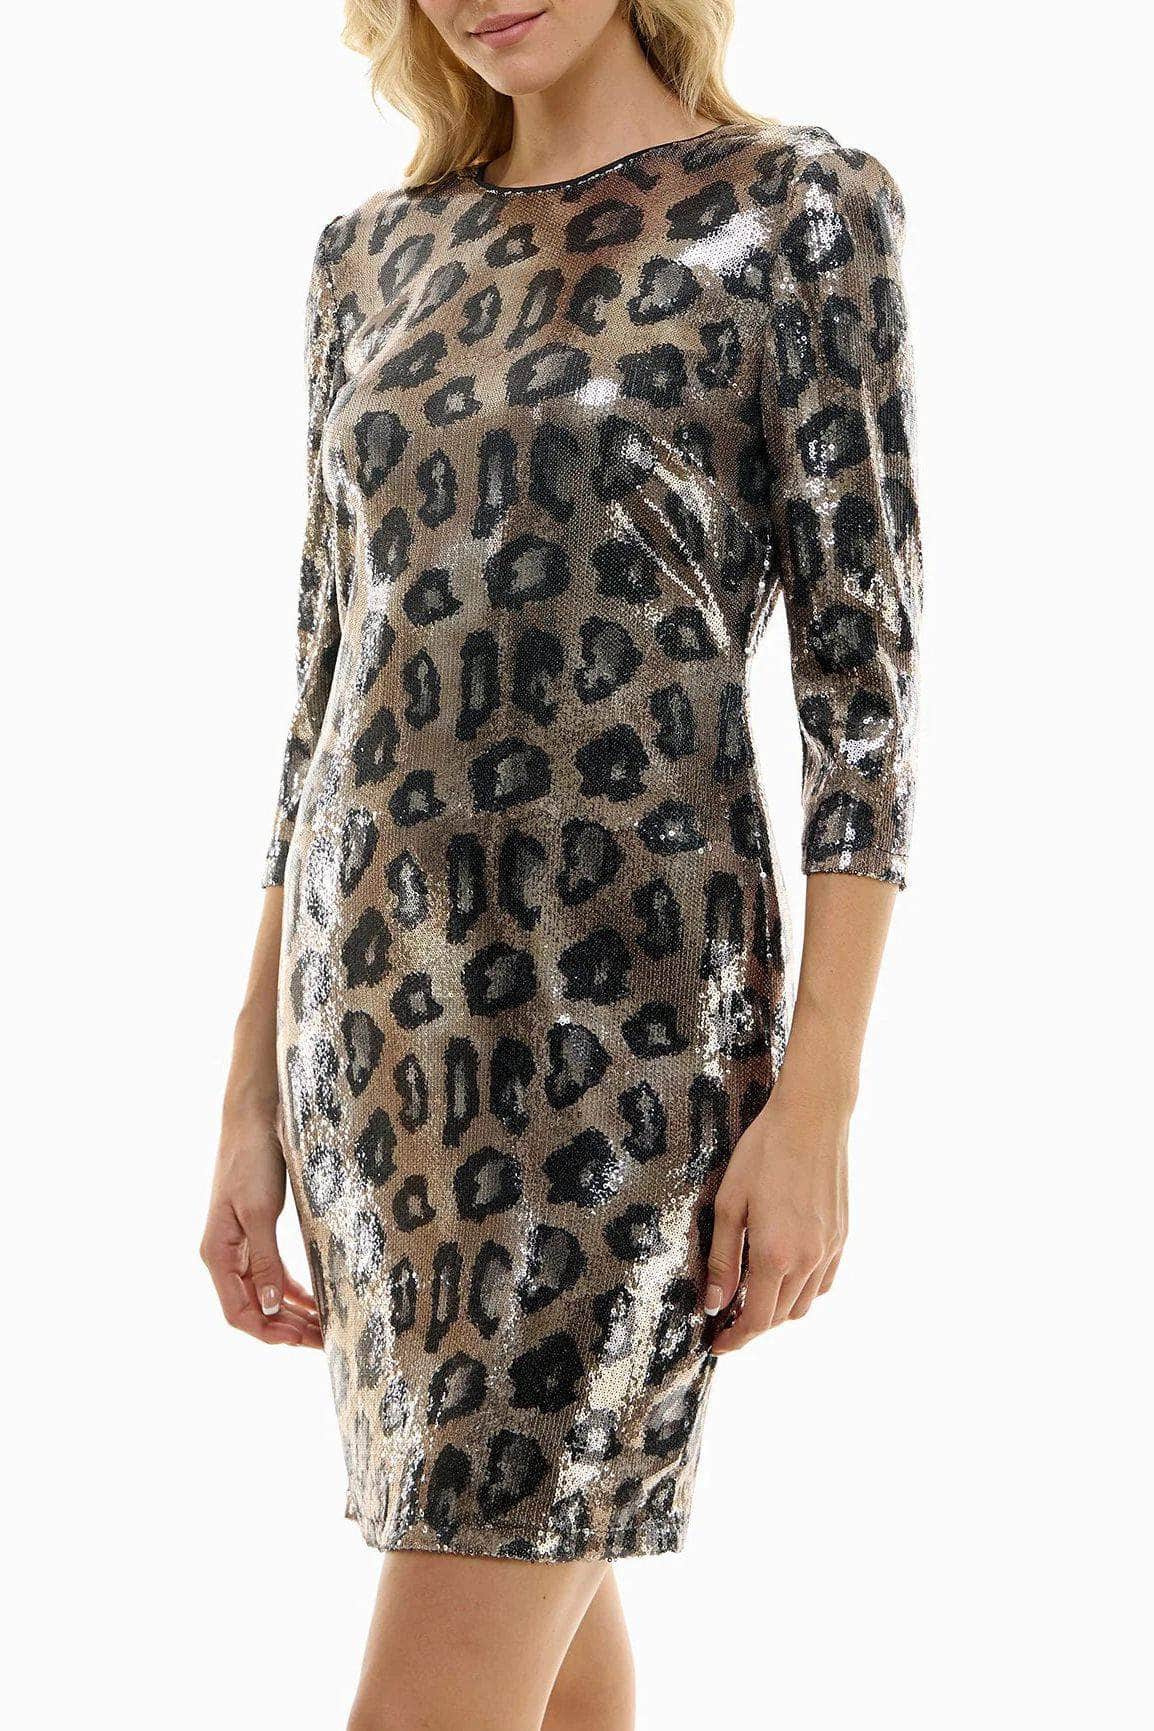 Nicole Miller MD3H1992H - Animal Print Sequin Dress
